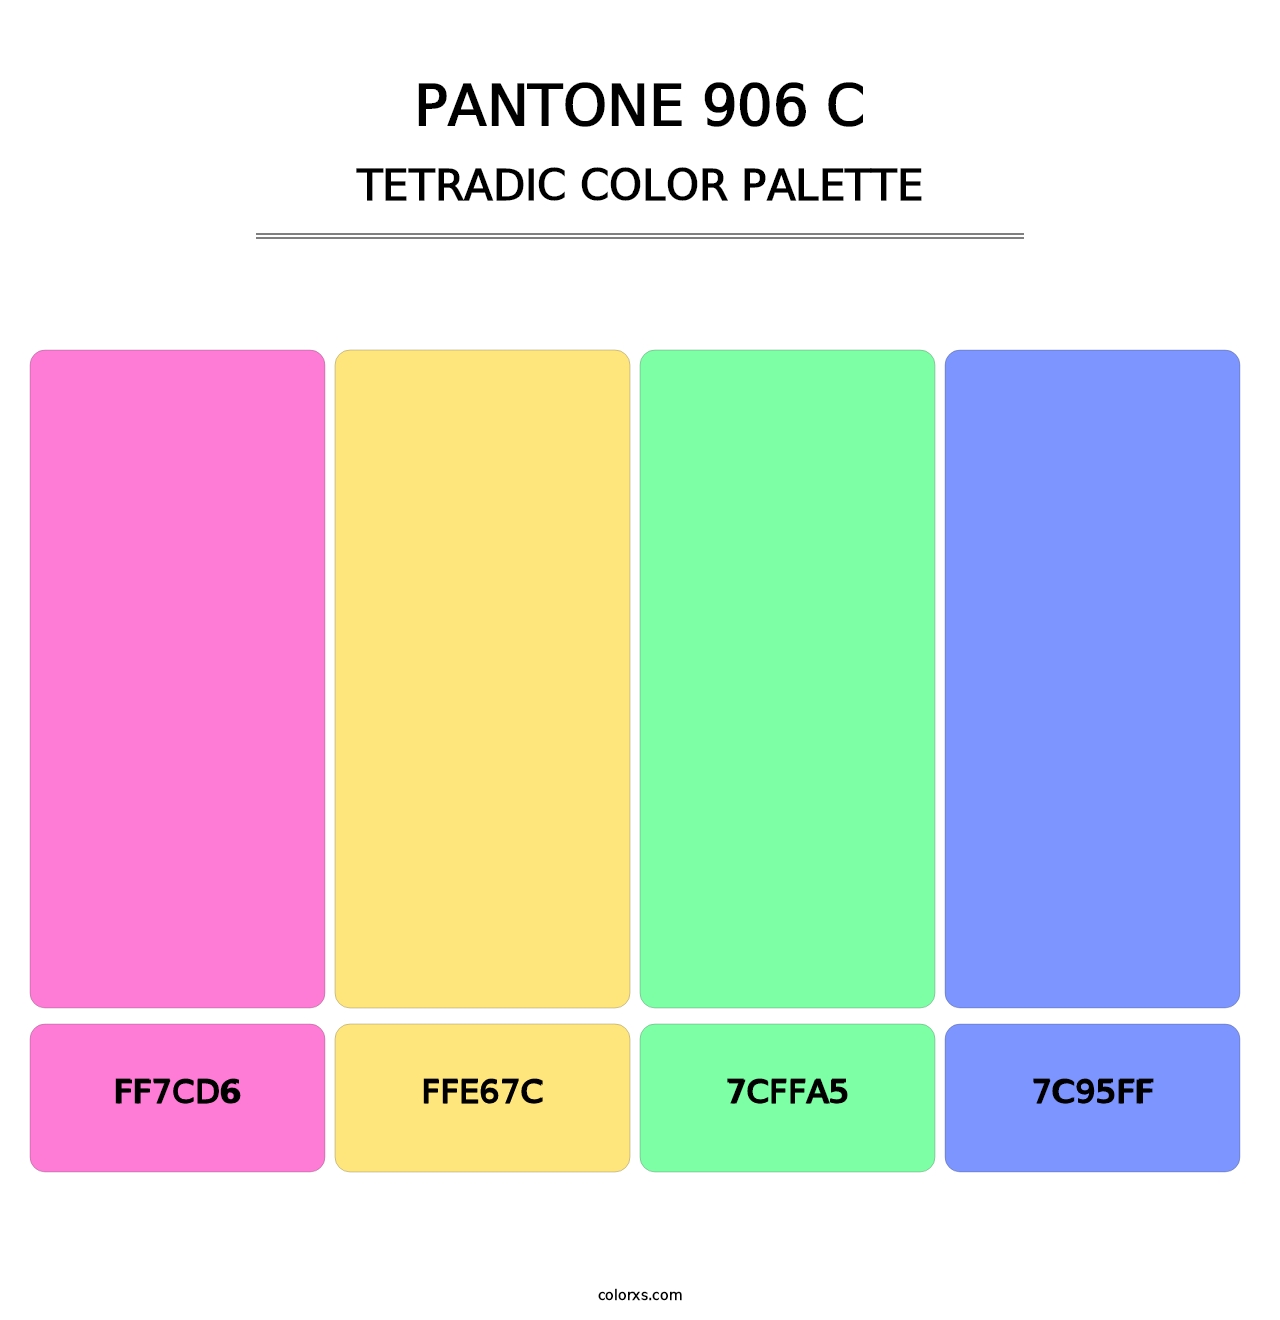 PANTONE 906 C - Tetradic Color Palette